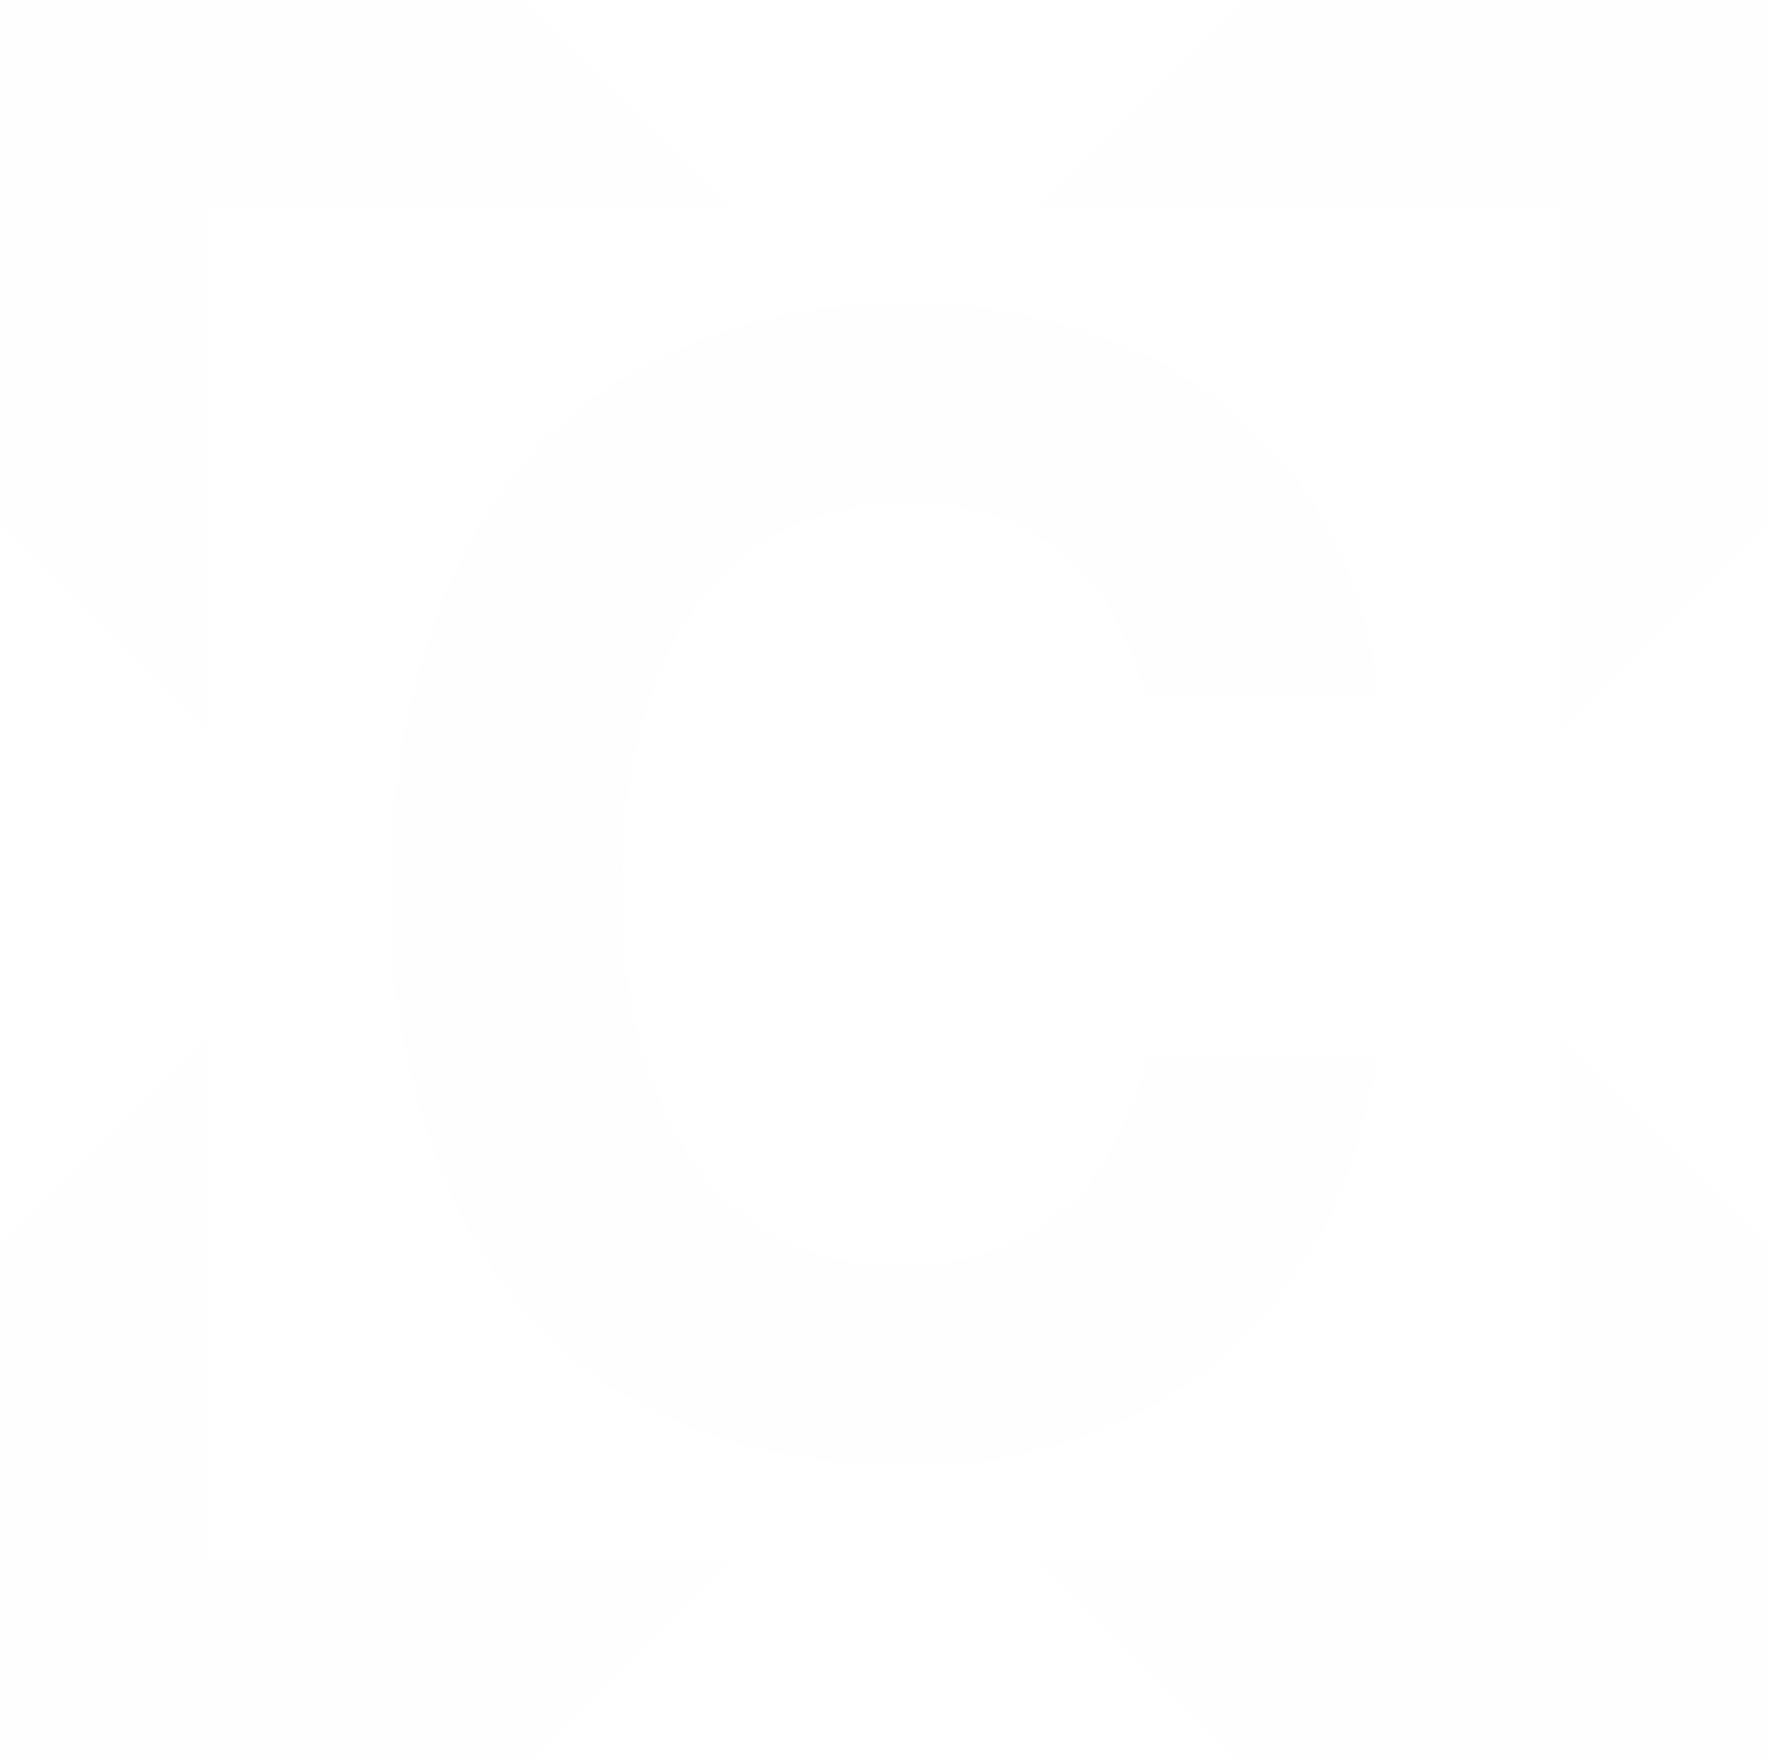 CloudNow Logo